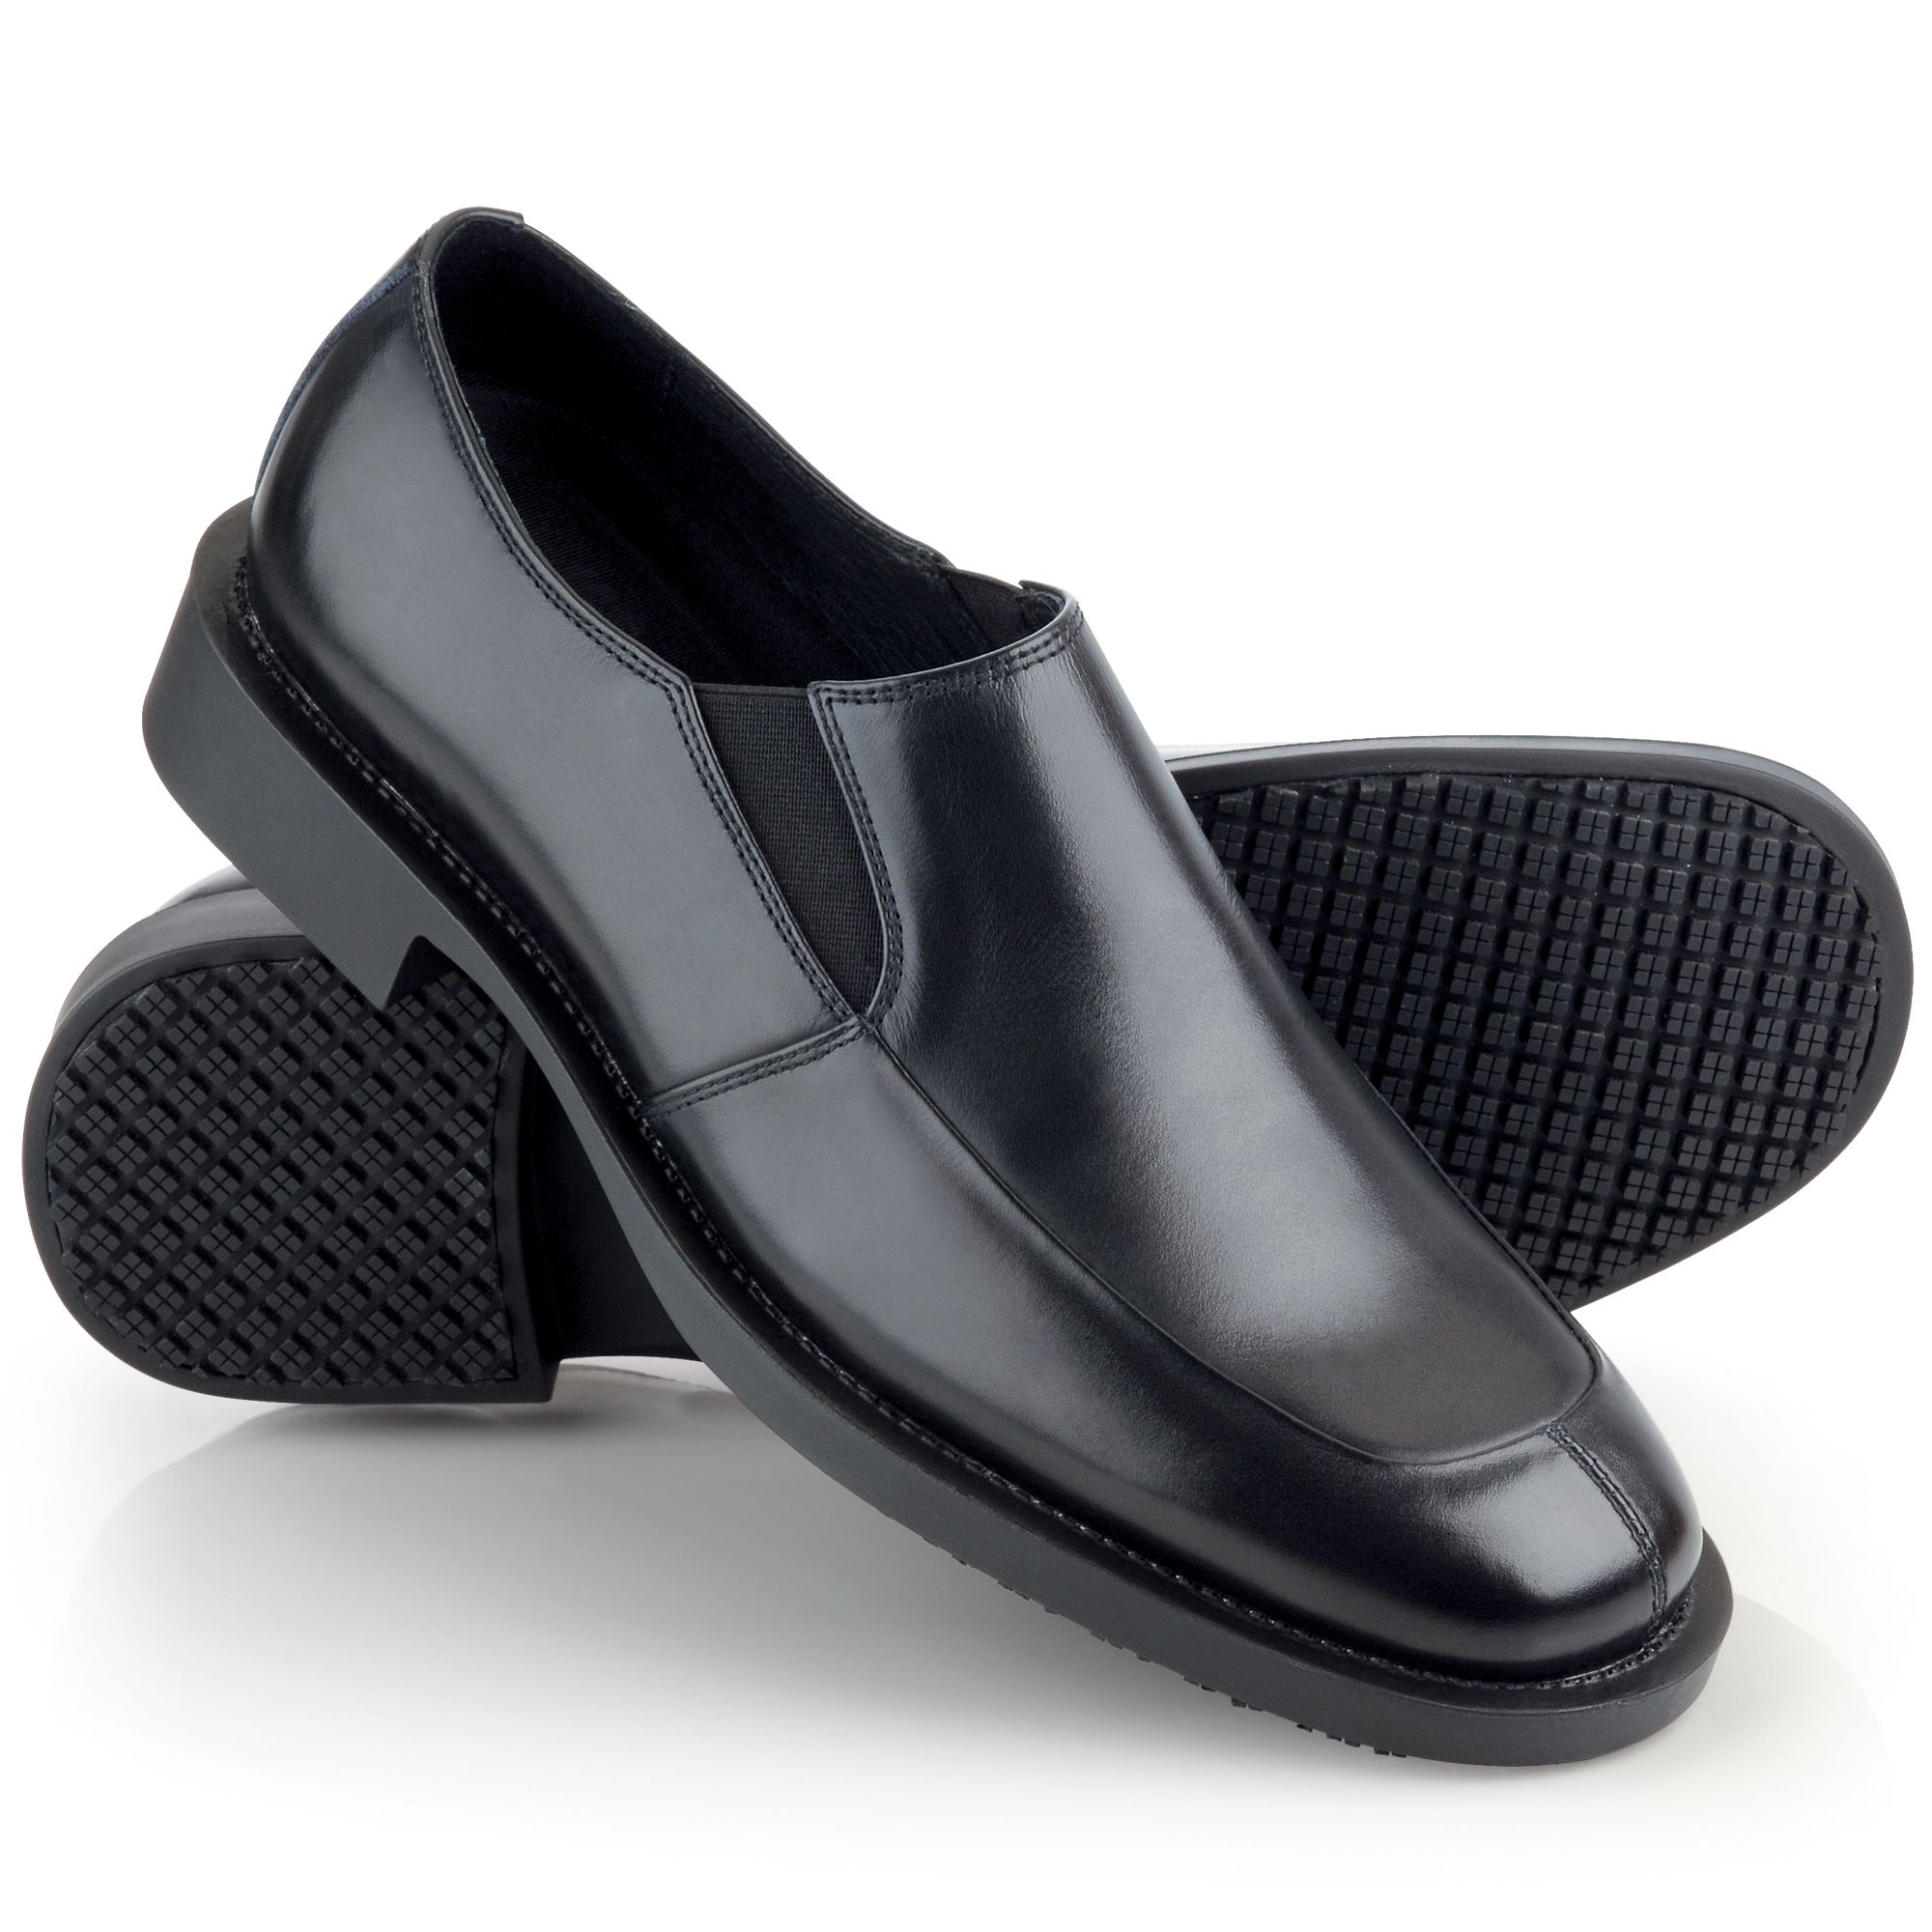 Shoes For Crews Black, slipresistant dress style